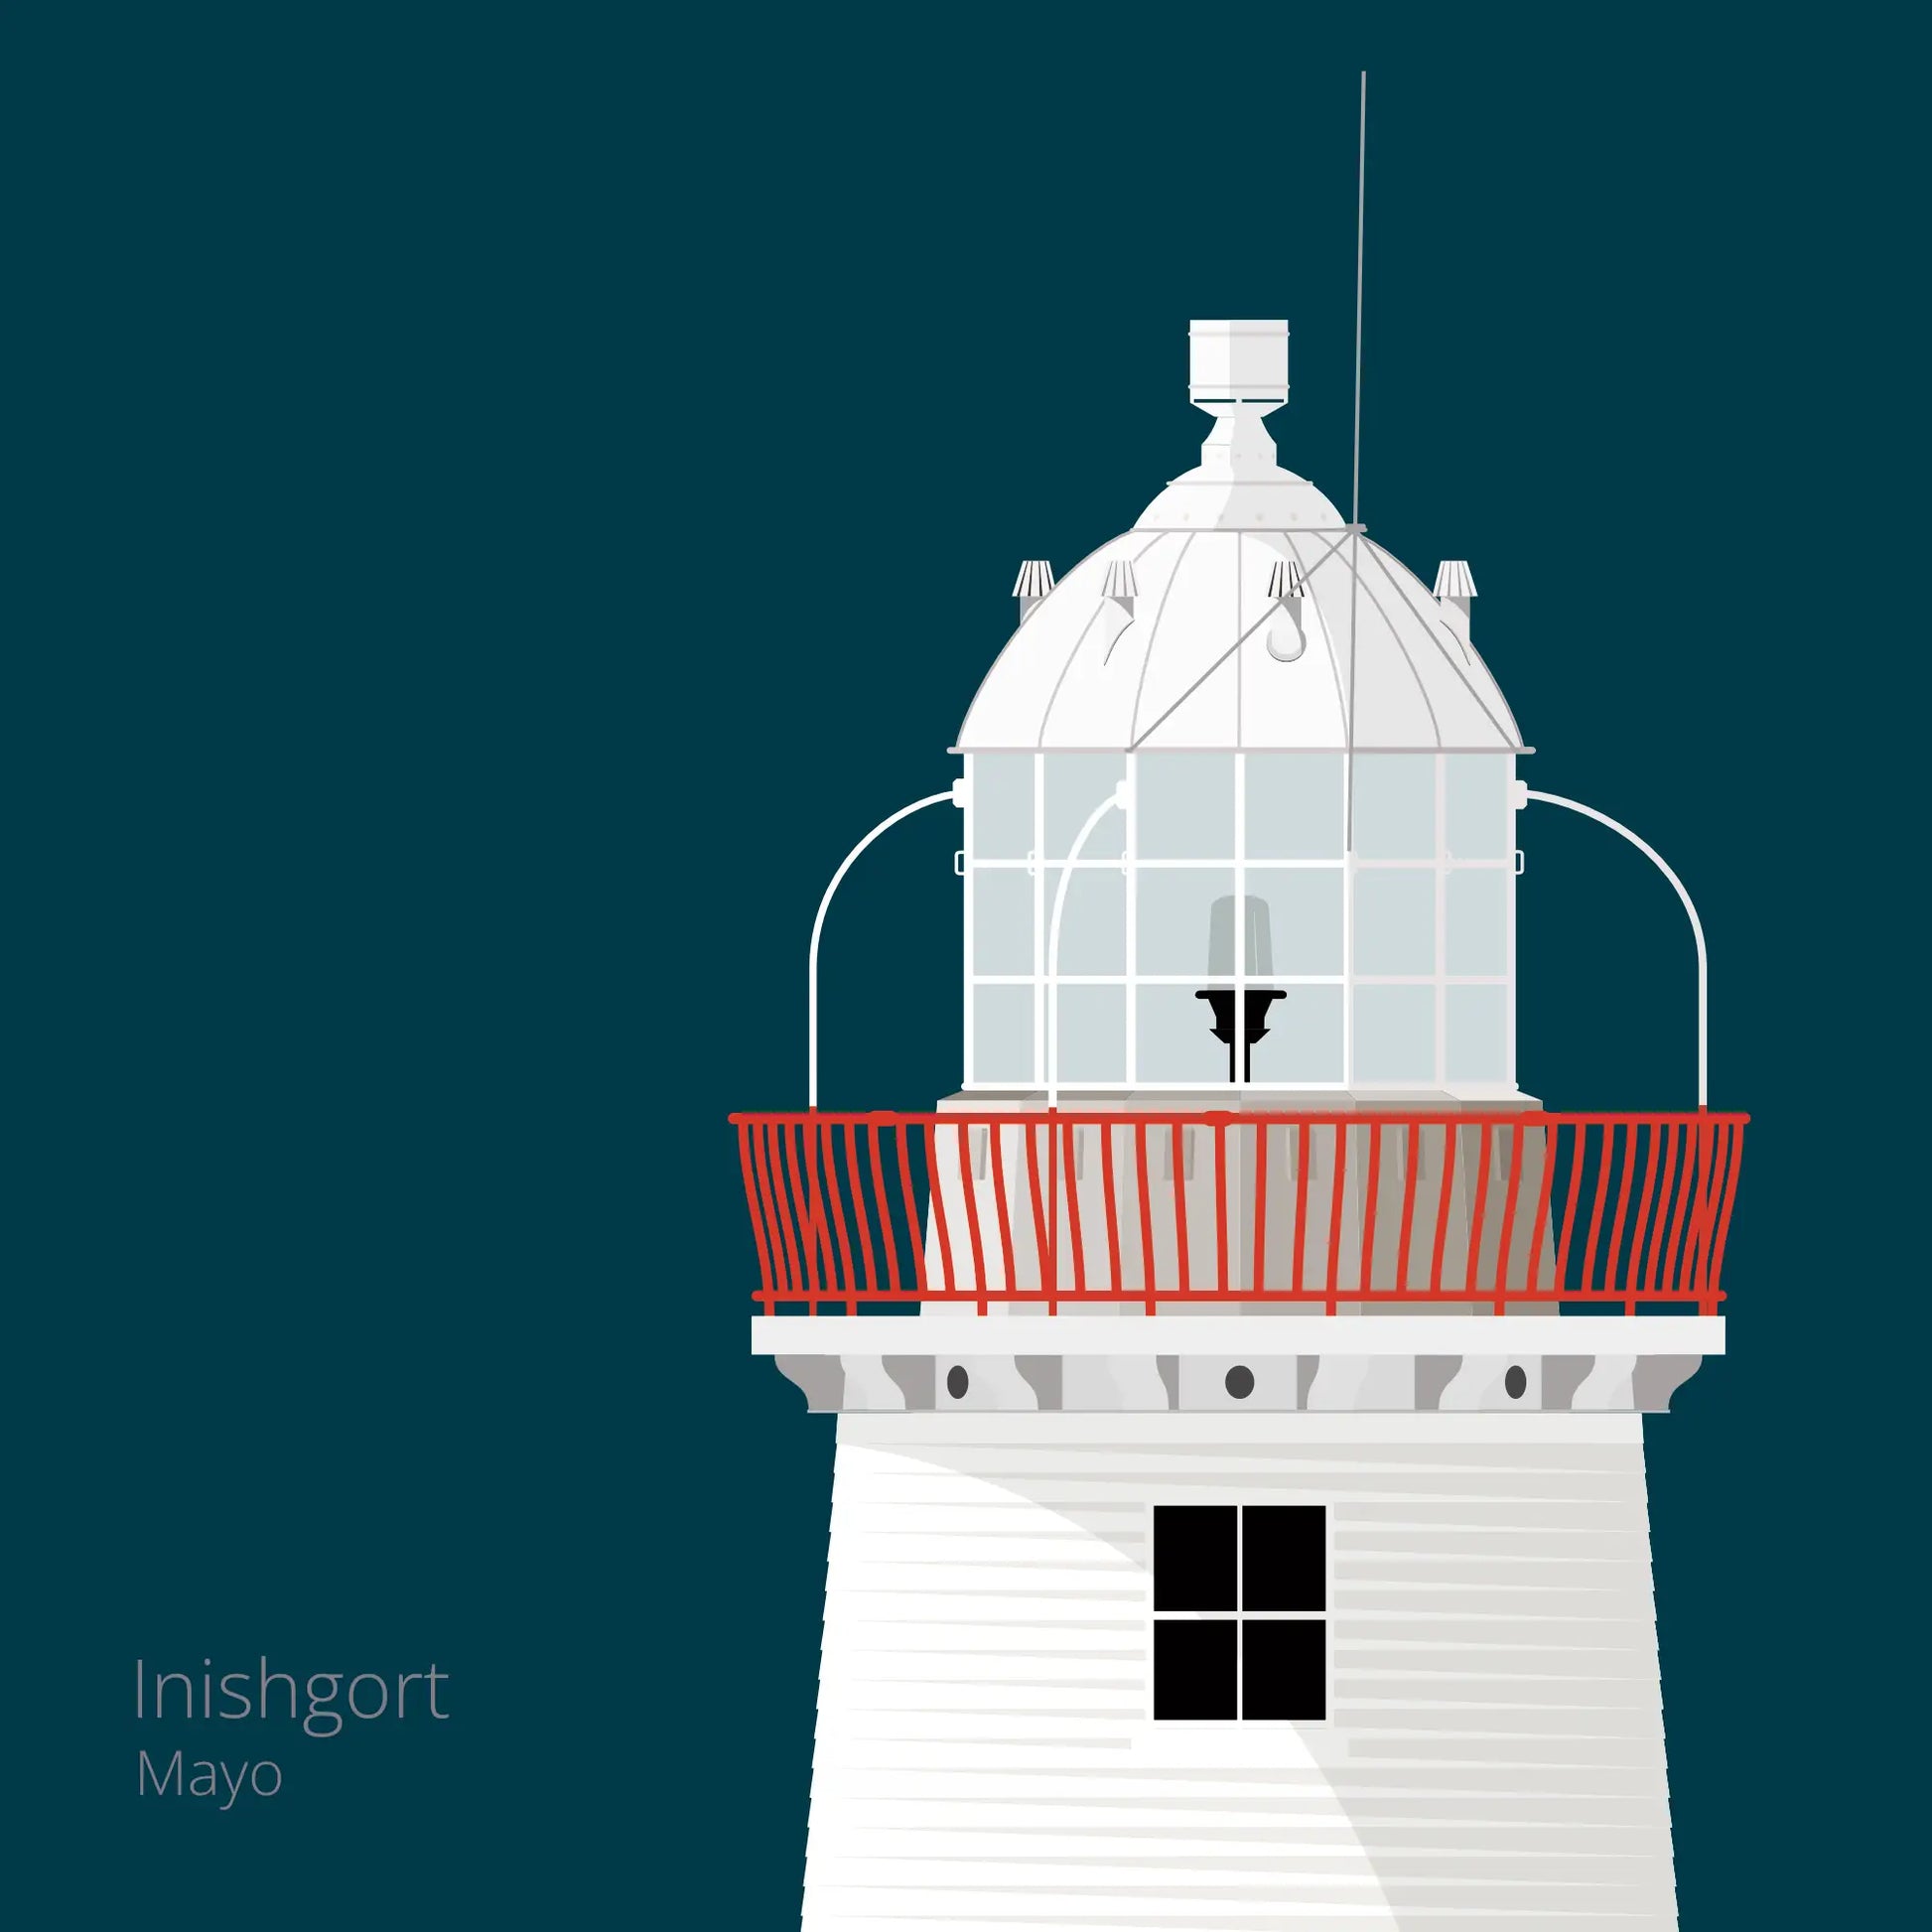 Illustration of Inishgort lighthouse on a midnight blue background